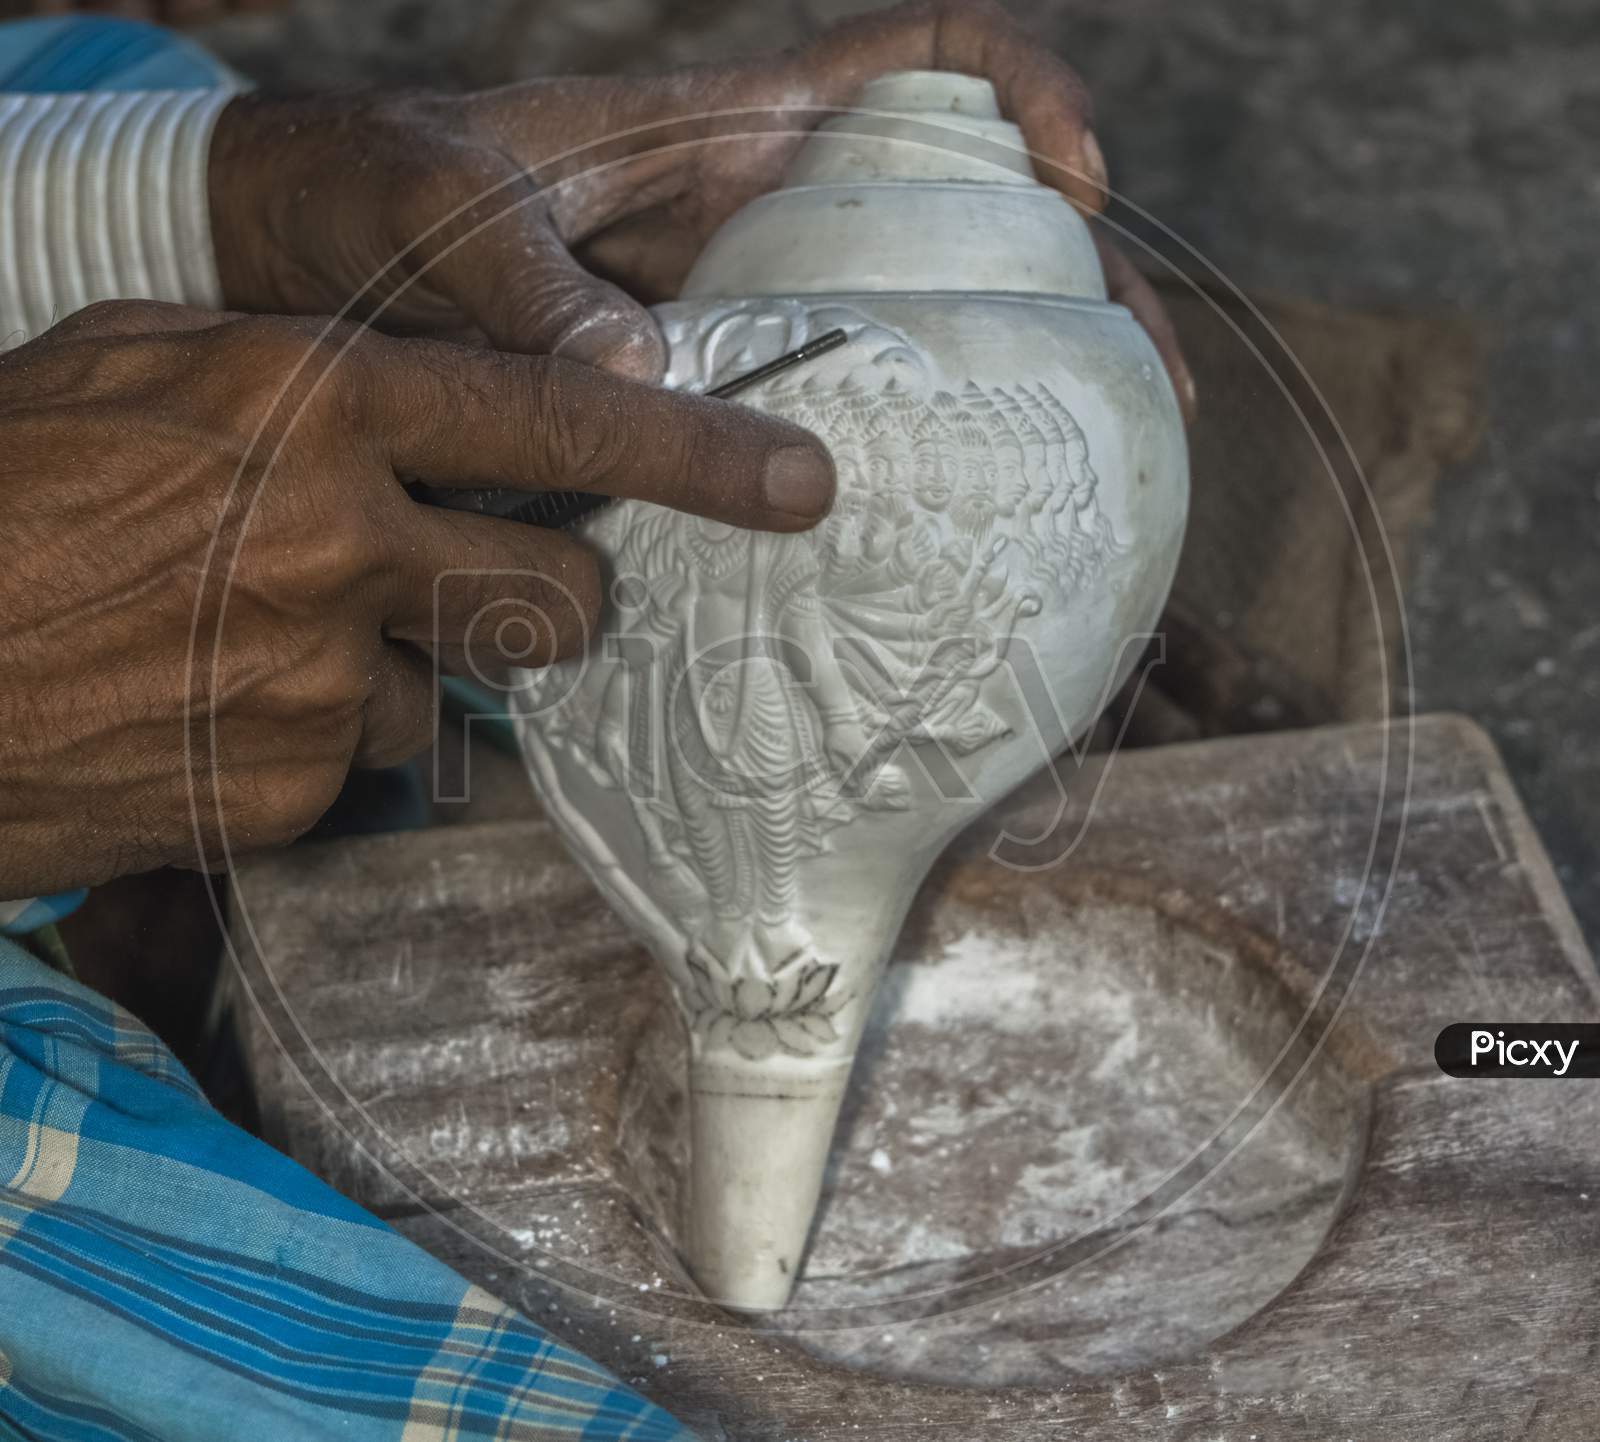 Conch Artist Village of bankura dist, Westbengal India